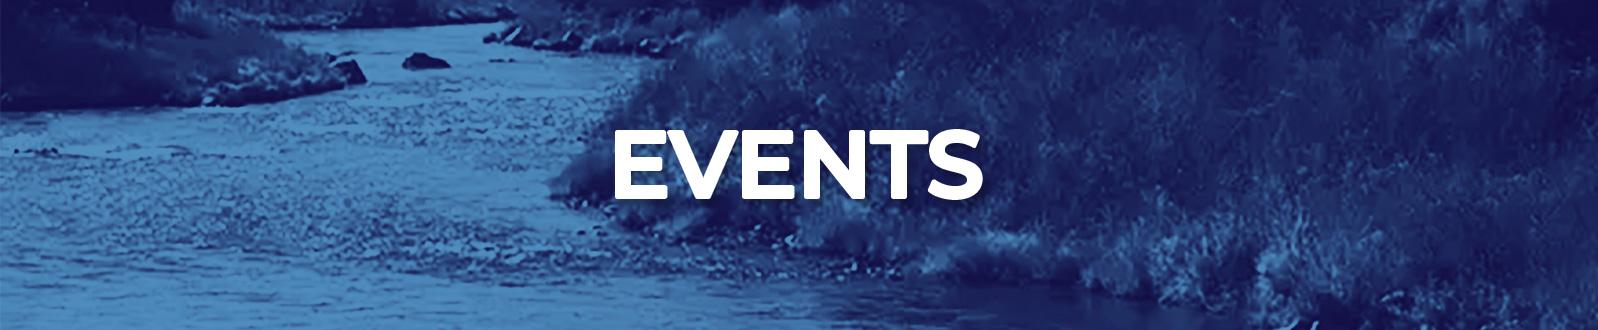 Events-Header.jpg